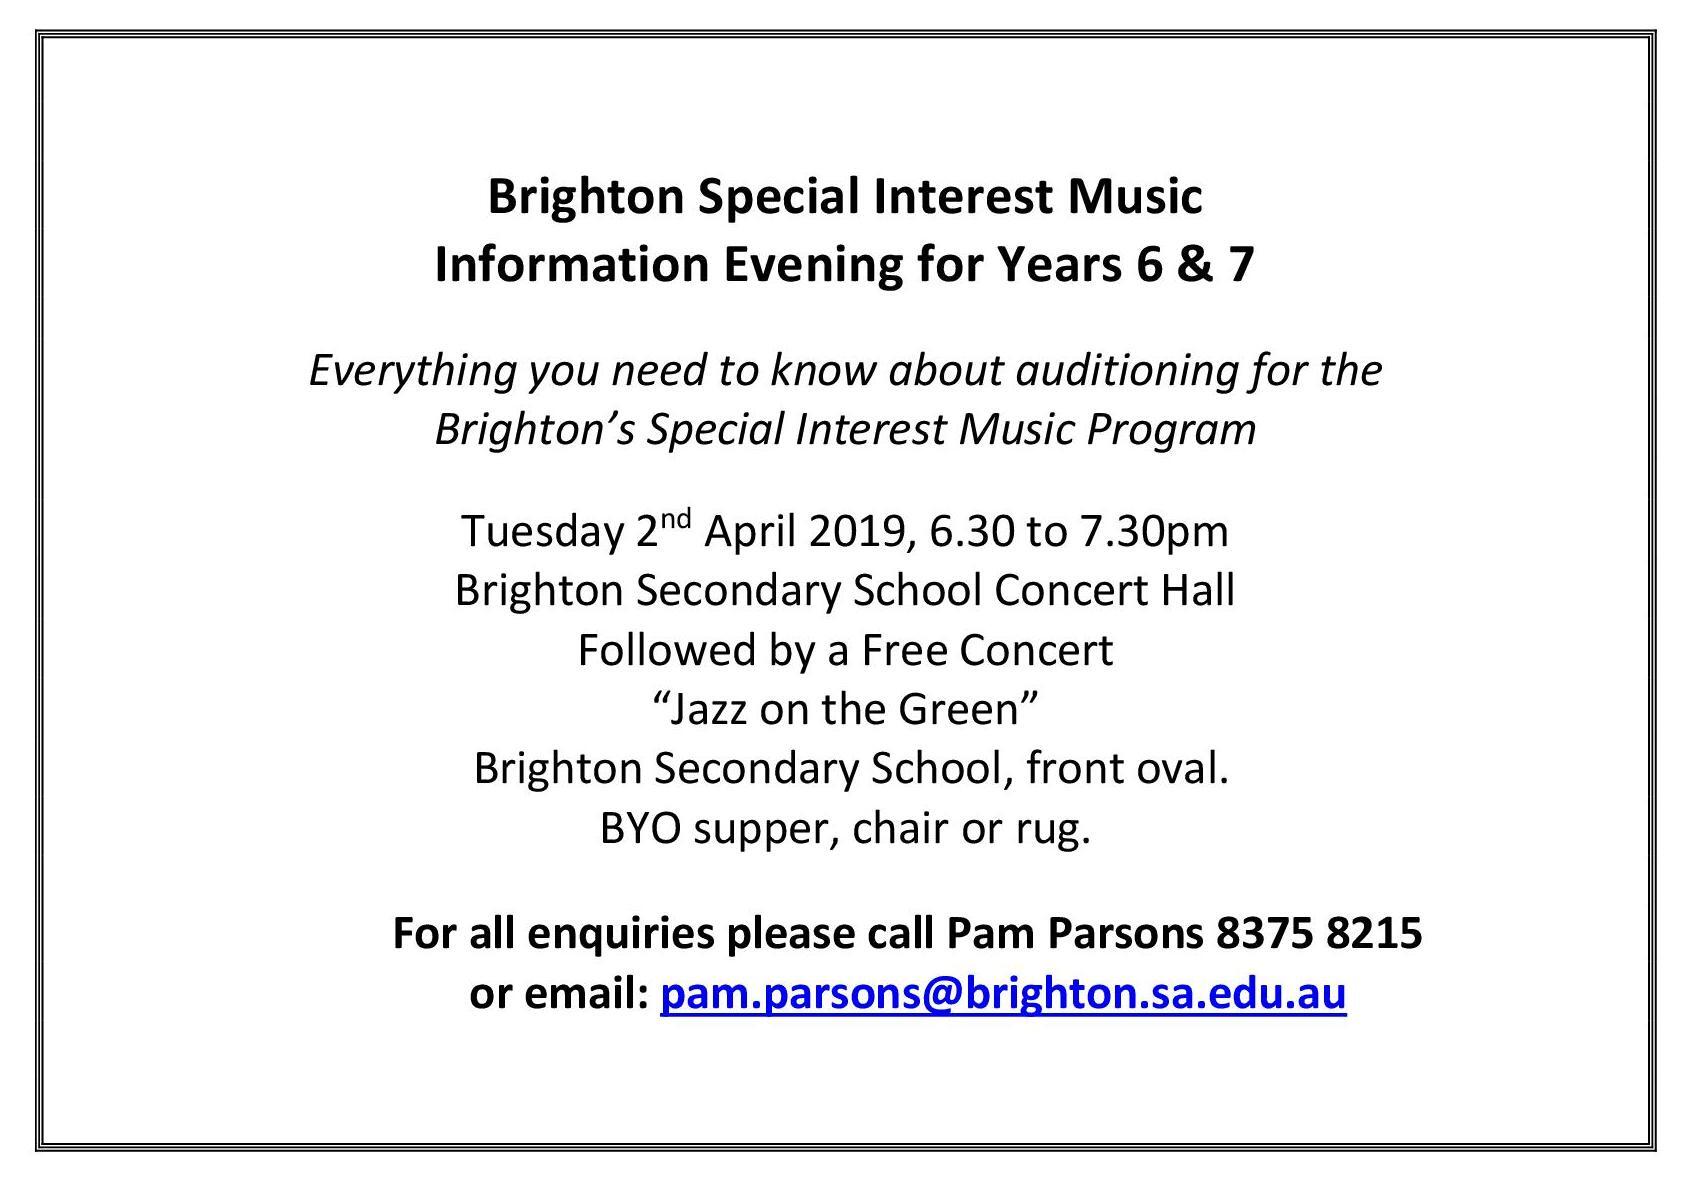 Brighton Secondary School Special Interest Music